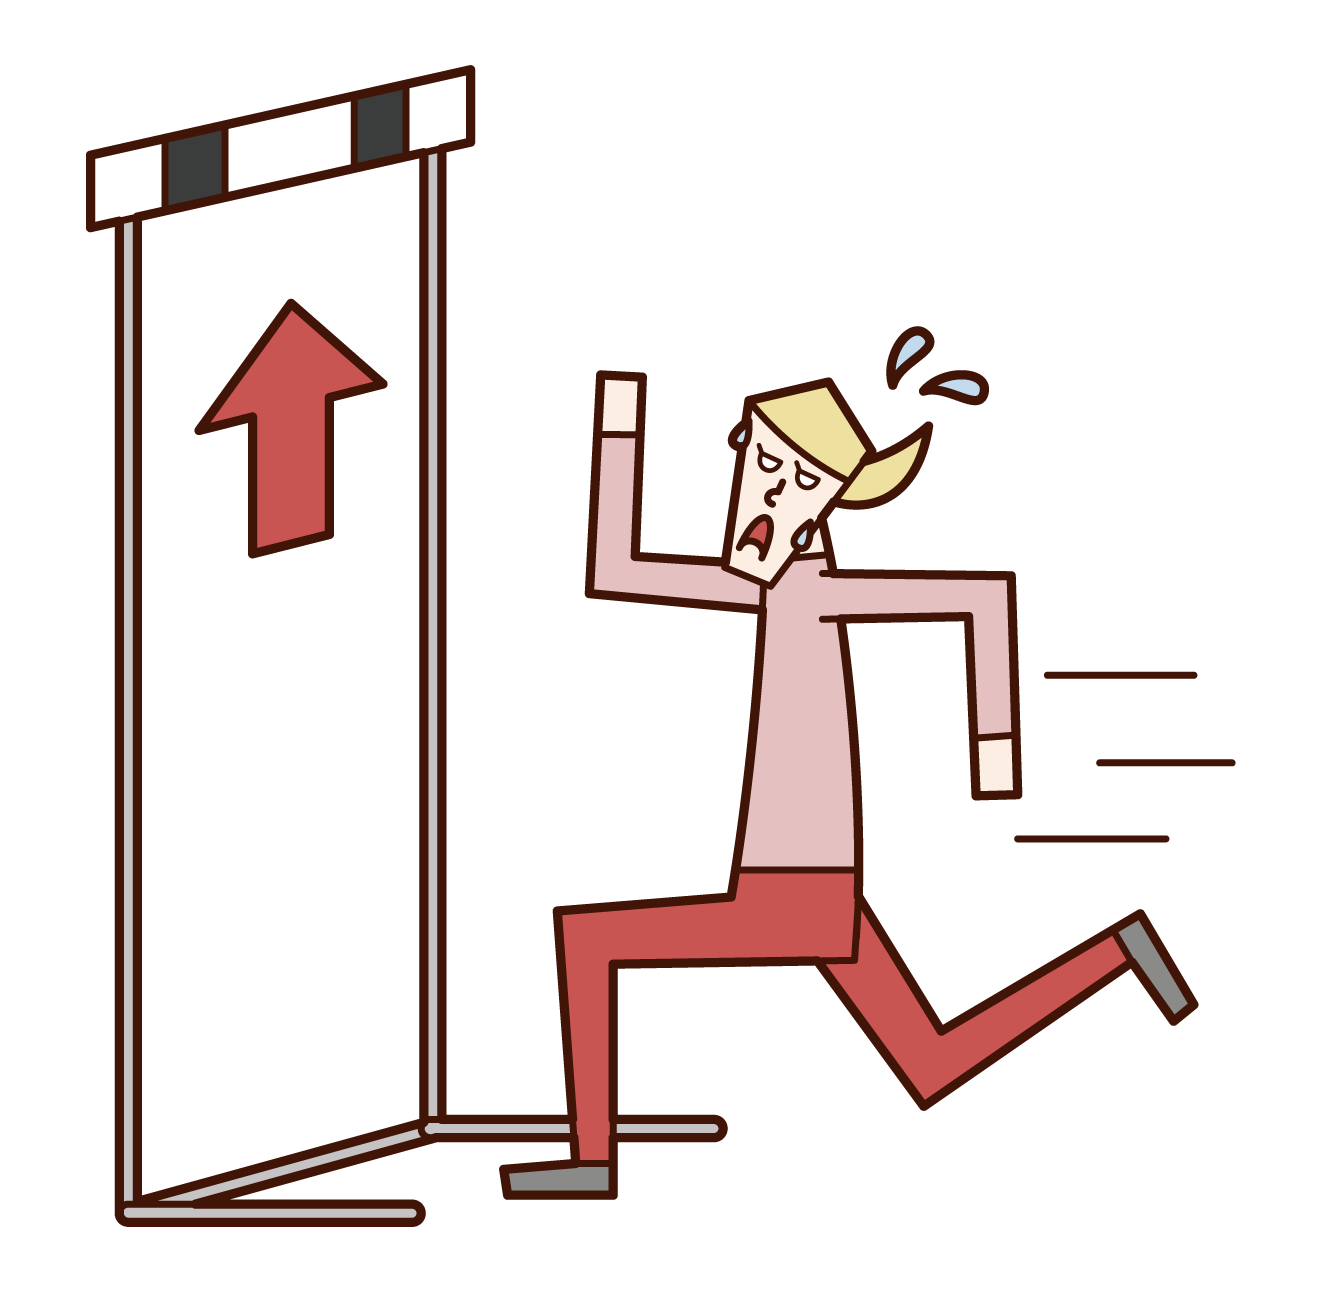 Illustration of a woman facing a high hurdle